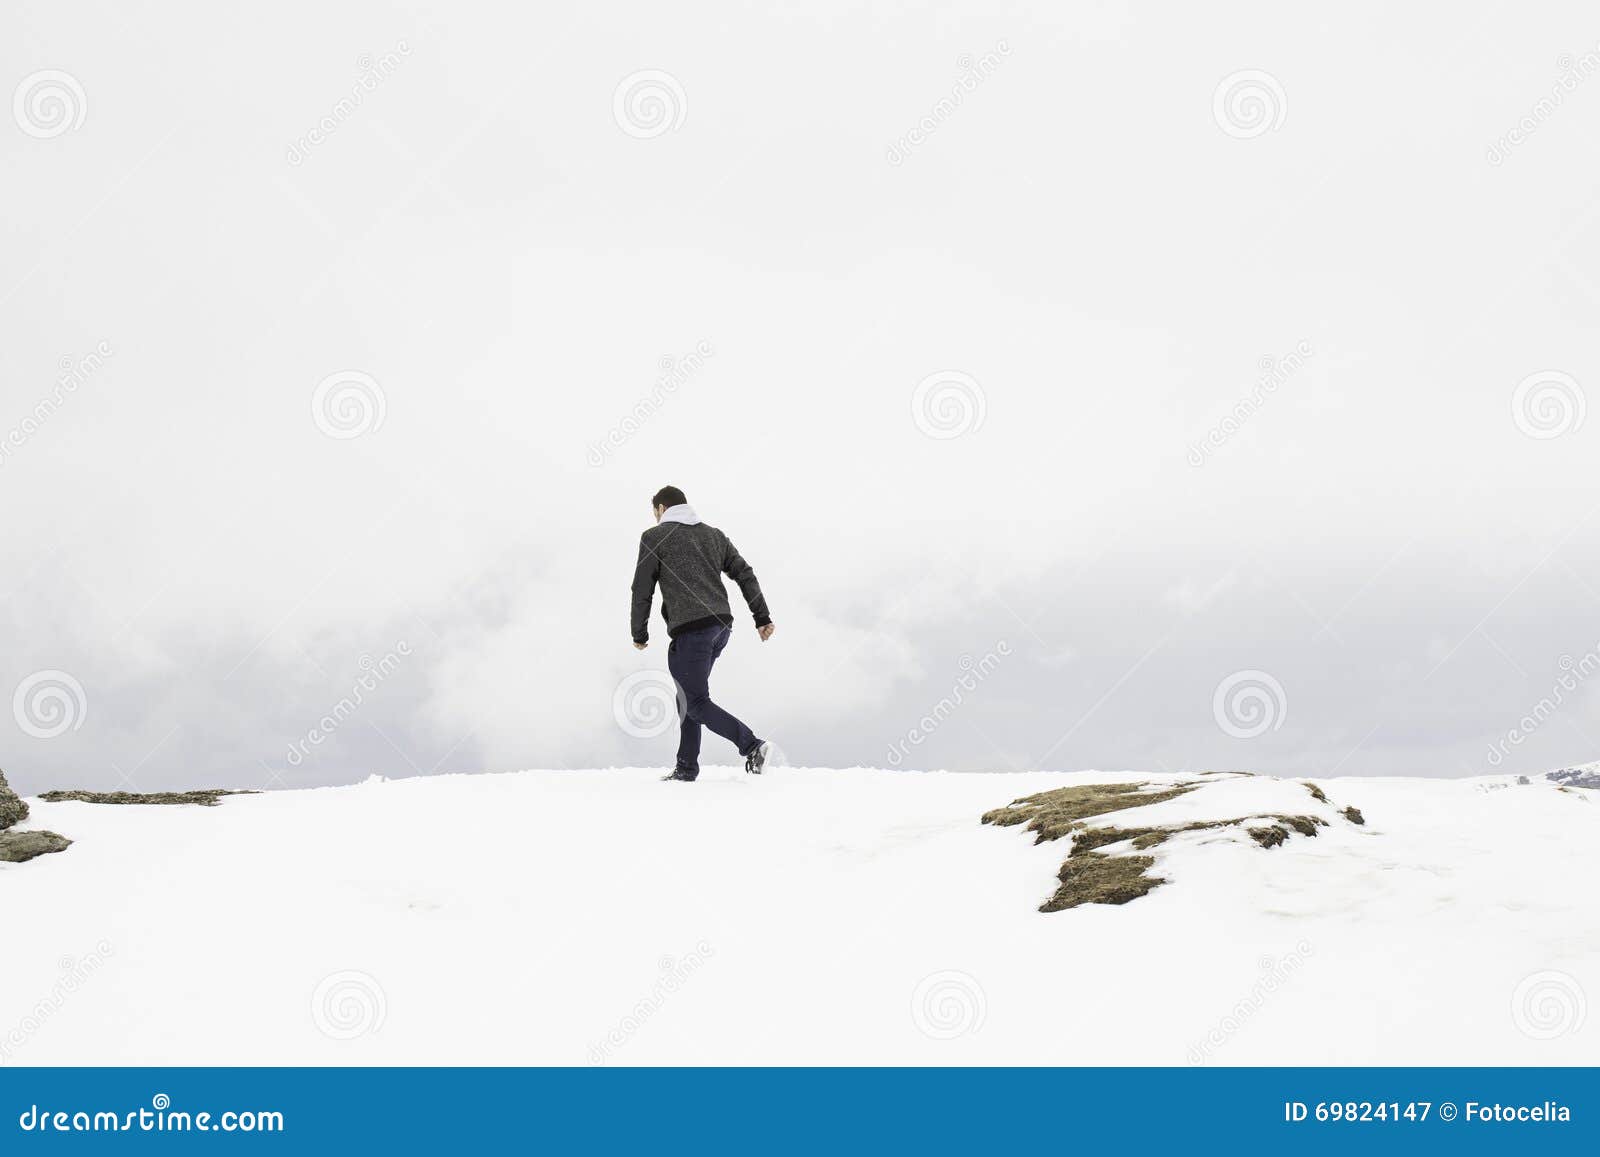 Walking snow rum перевод. Человек идет по снегу. Человек идет по сугробам. Человек идет по глубокому снегу. Человек идущий по снегу арт.